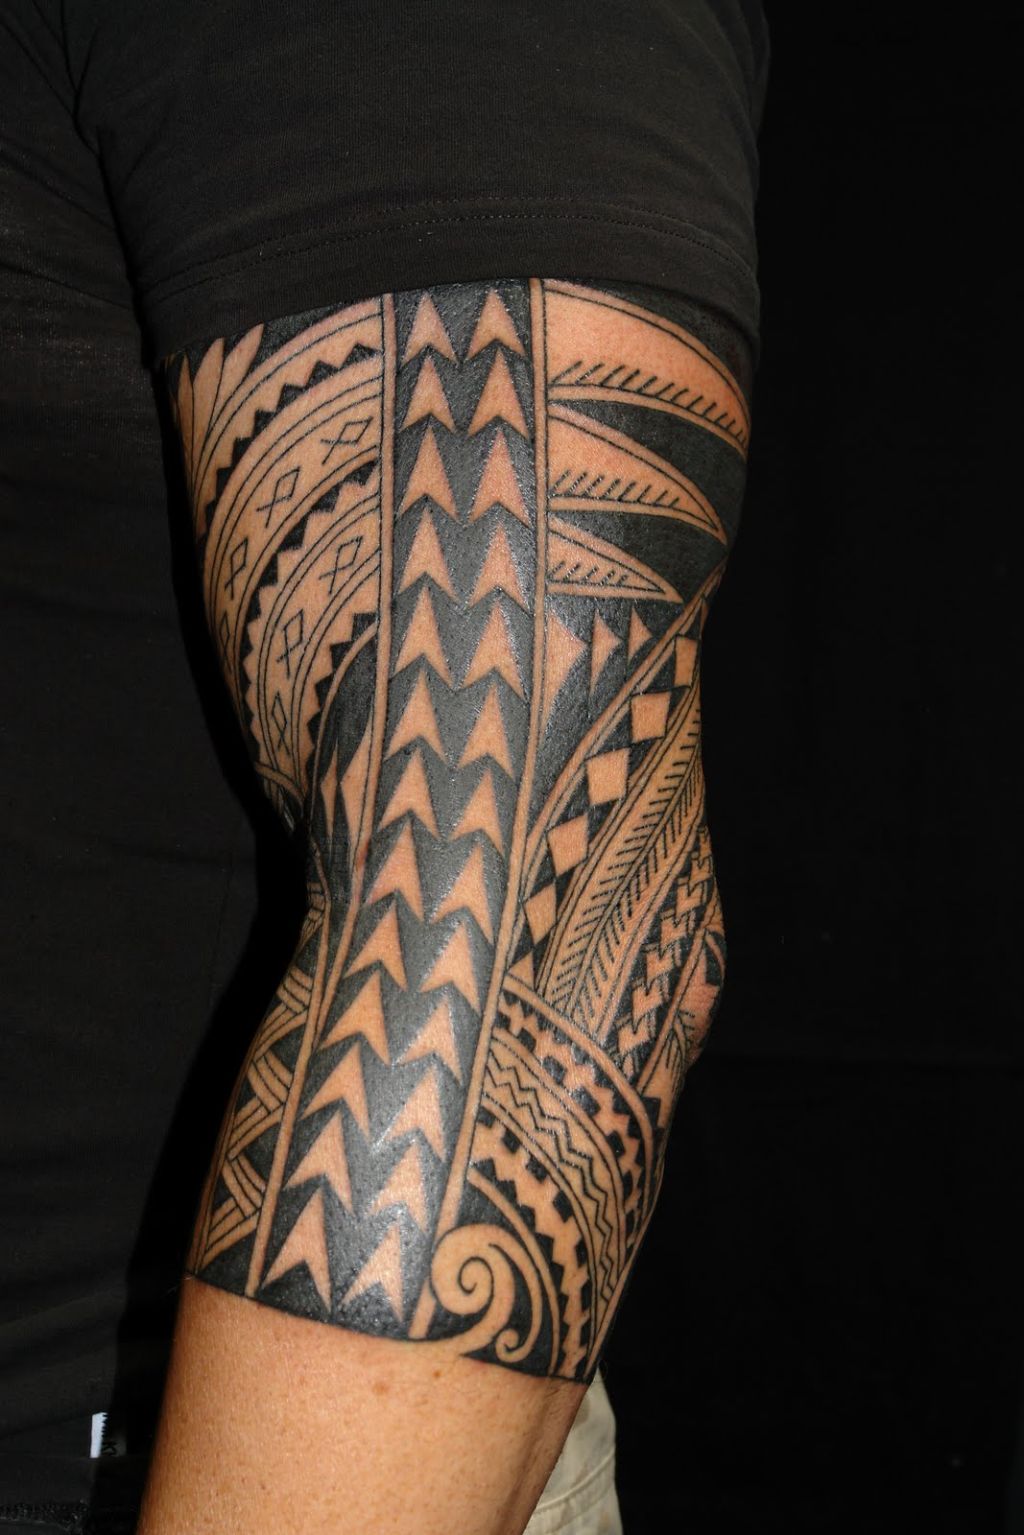 Stunning Maori Tattoo Designs pictures